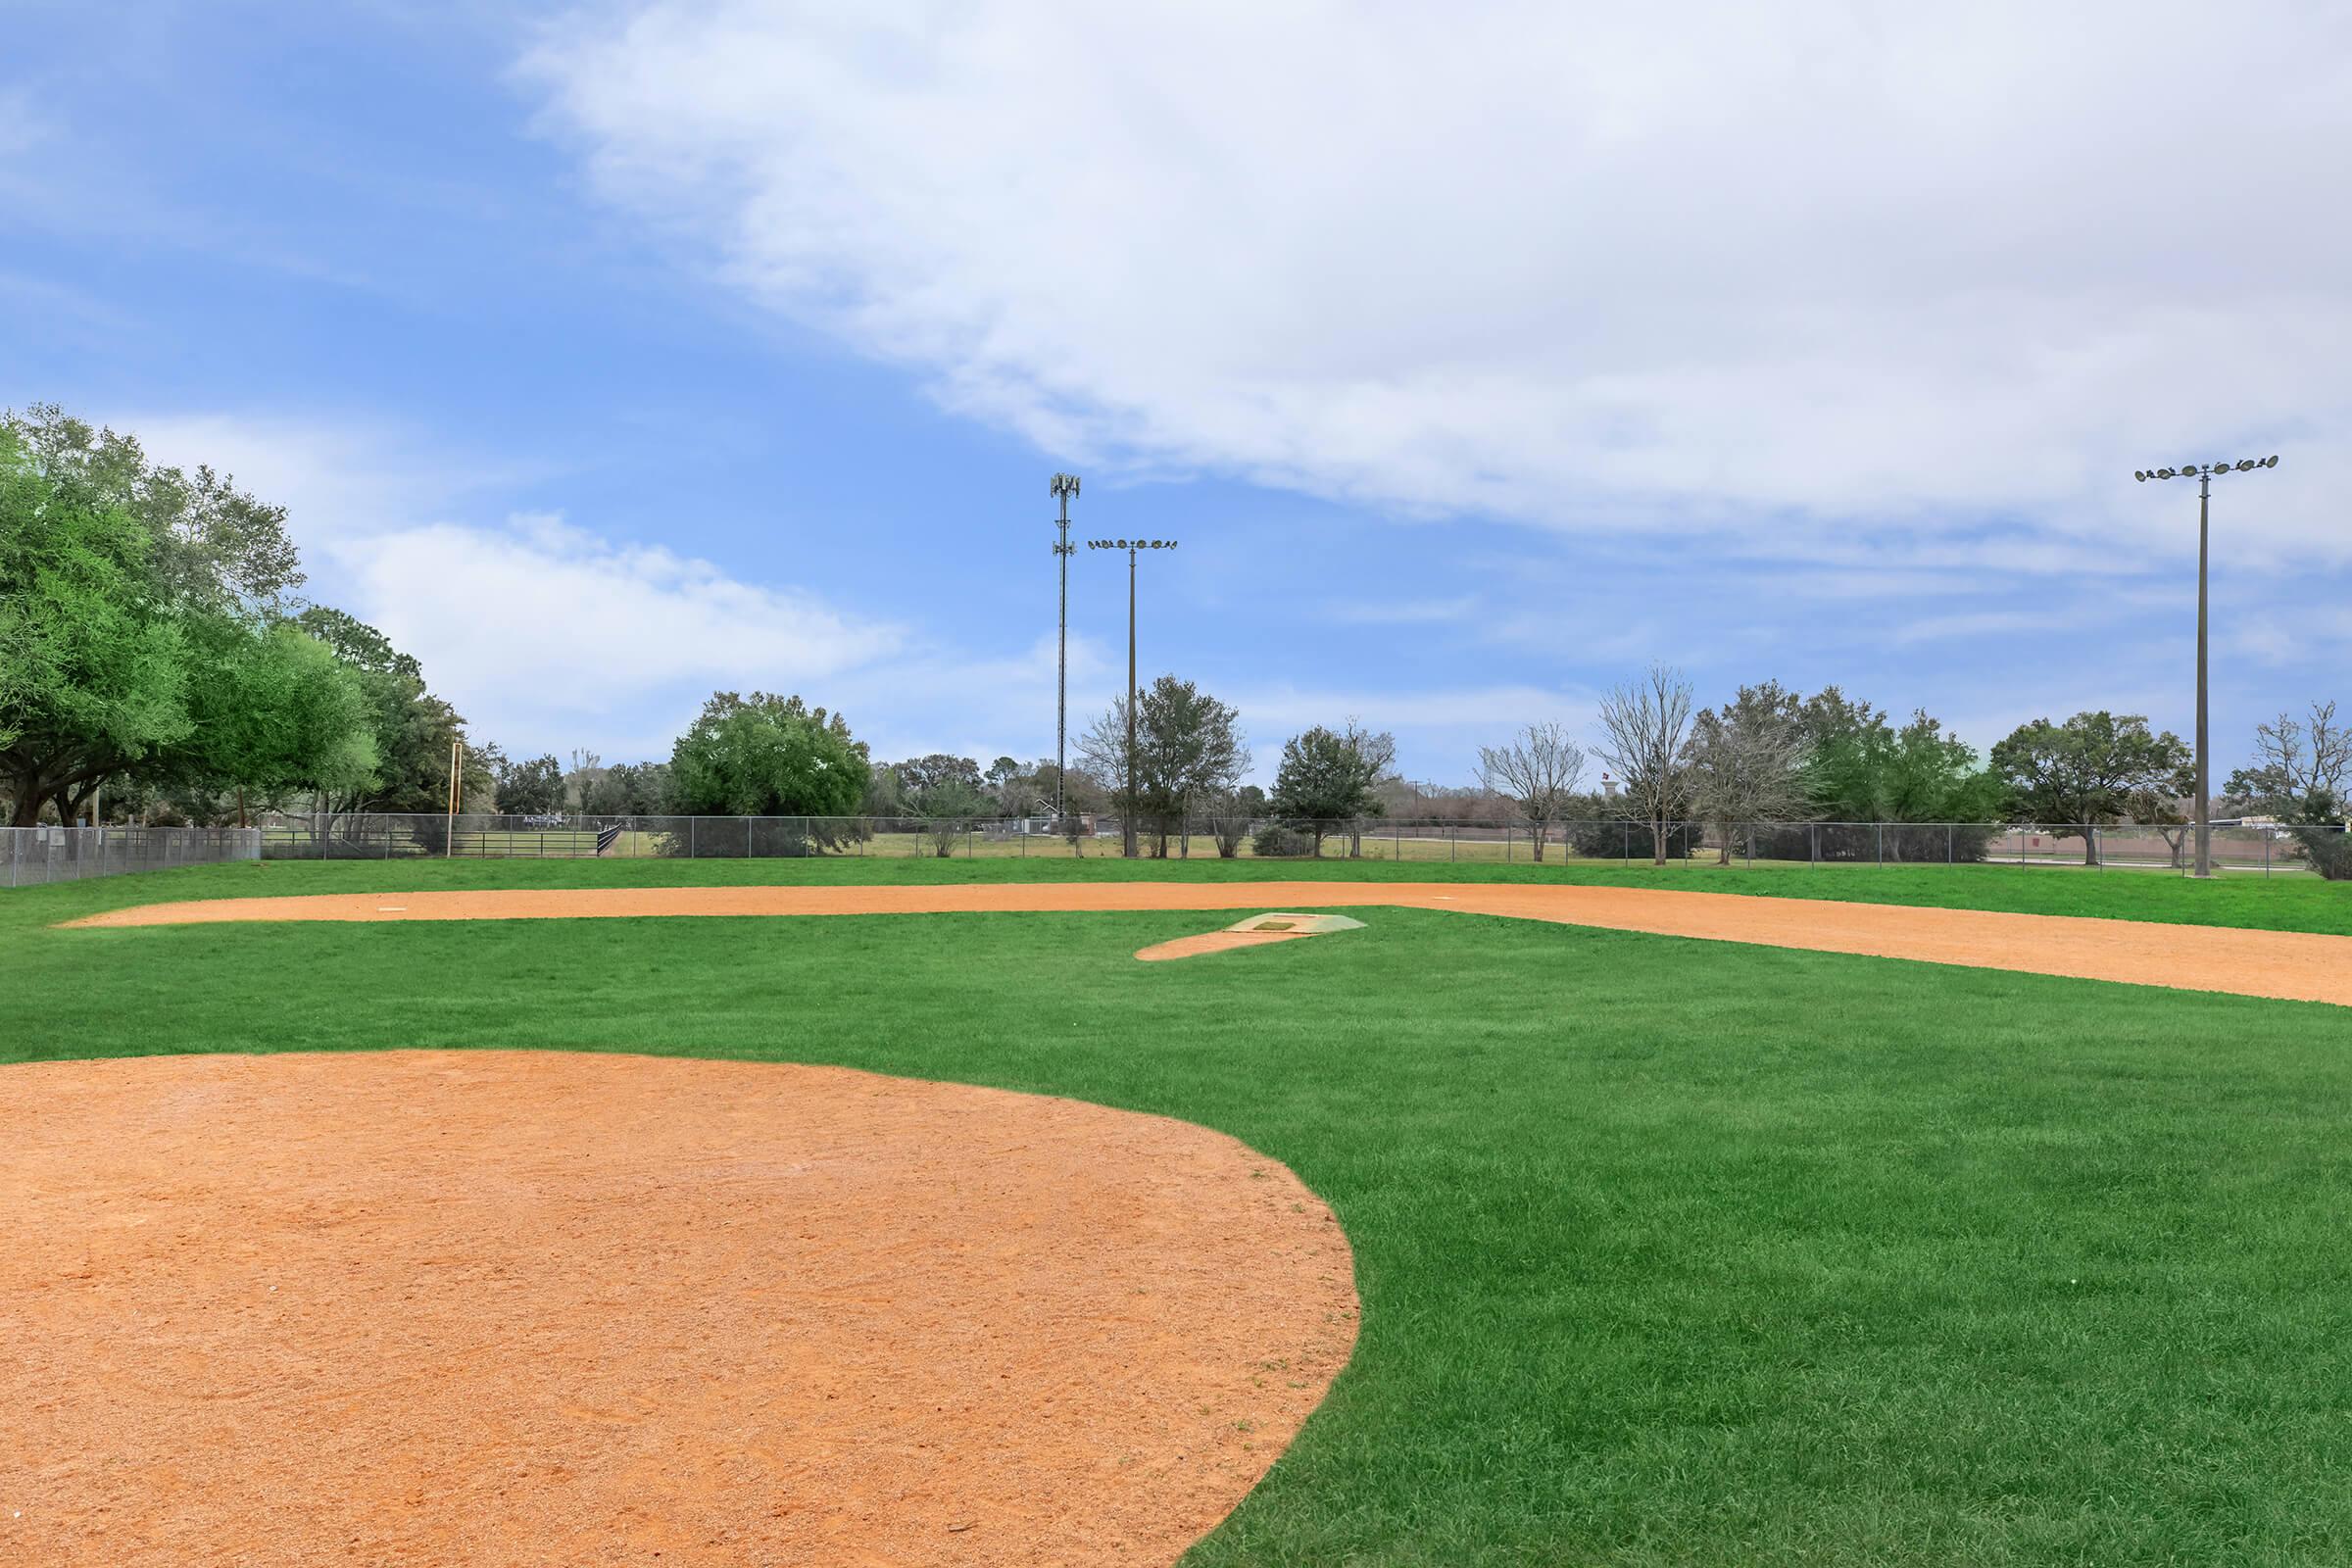 a close up of a baseball field